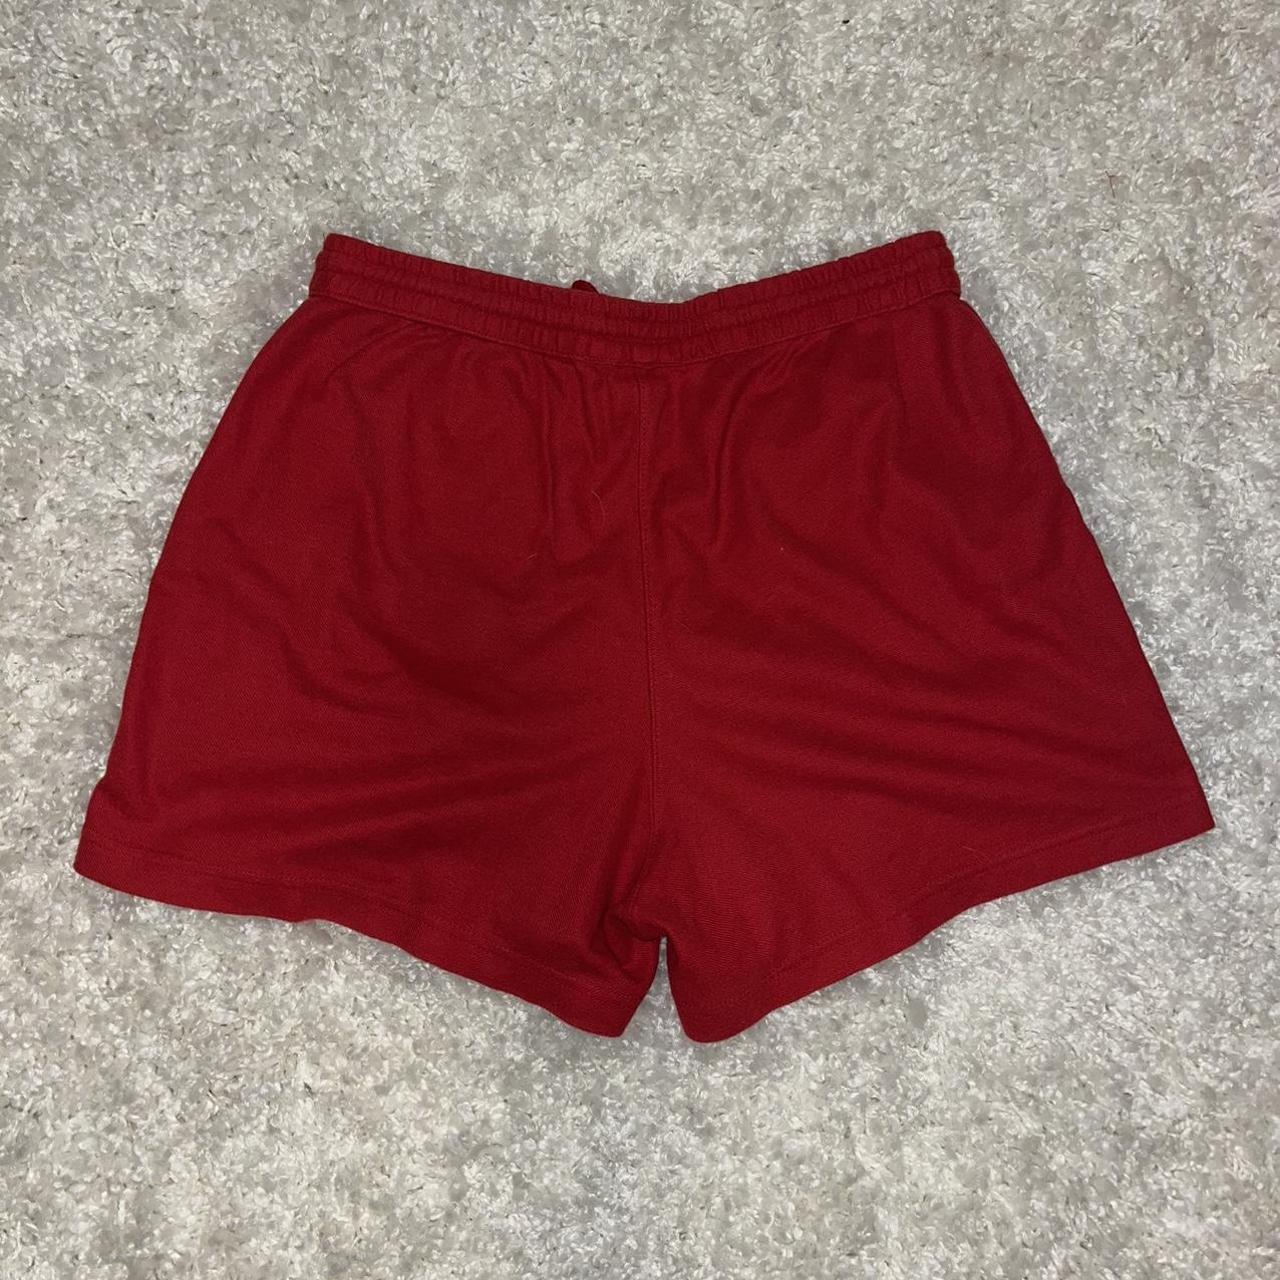 Regatta Women's Red Shorts (3)